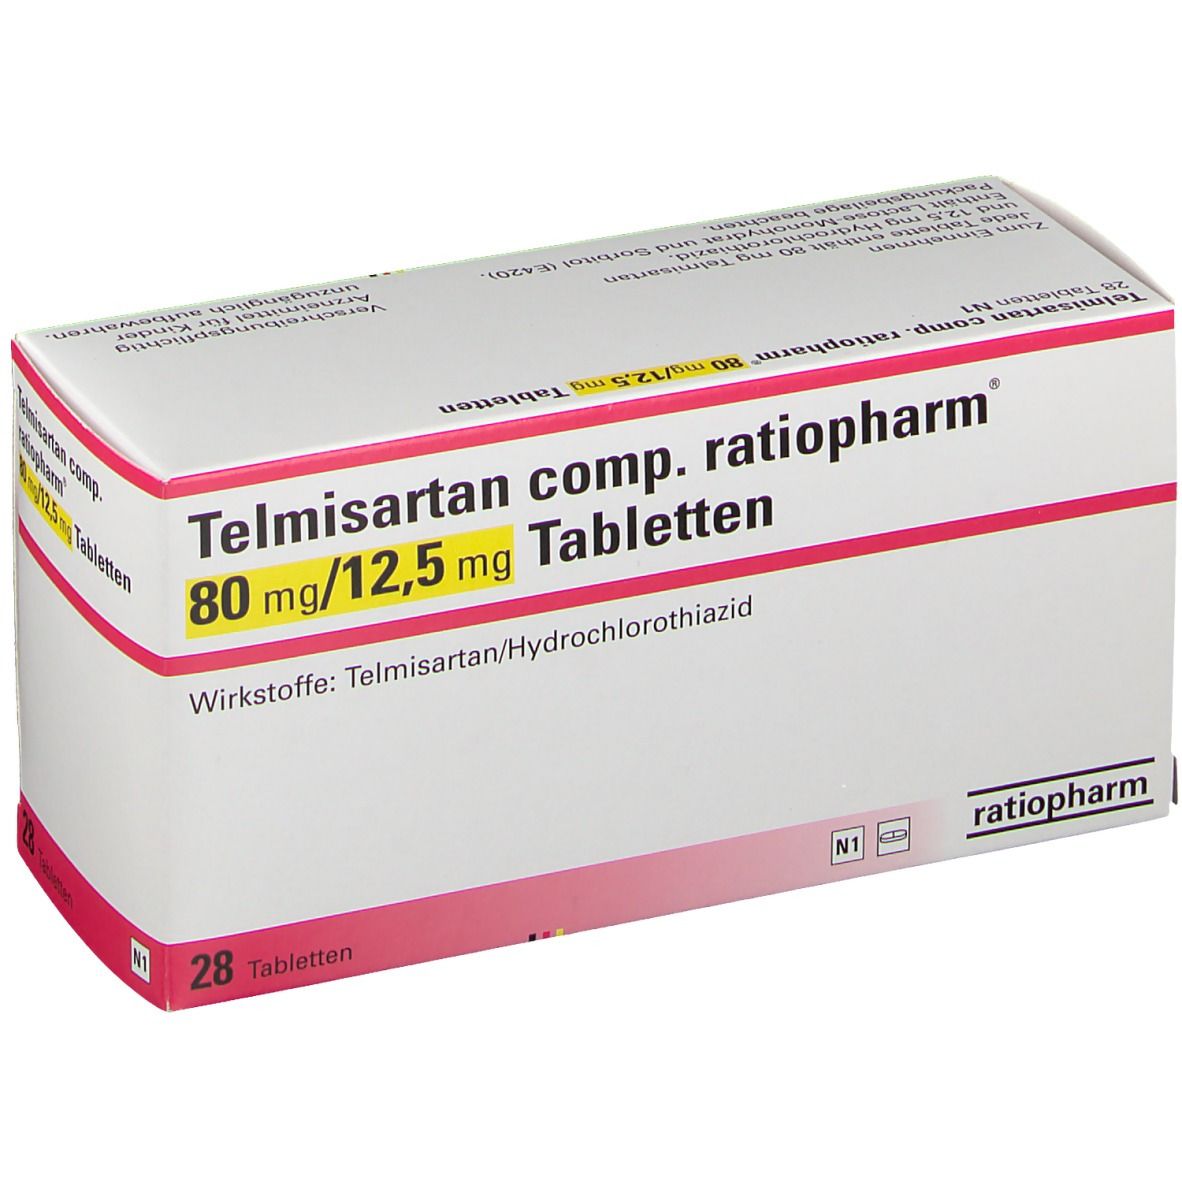 Telmisartan comp. ratiopharm® 80 mg/12,5 mg